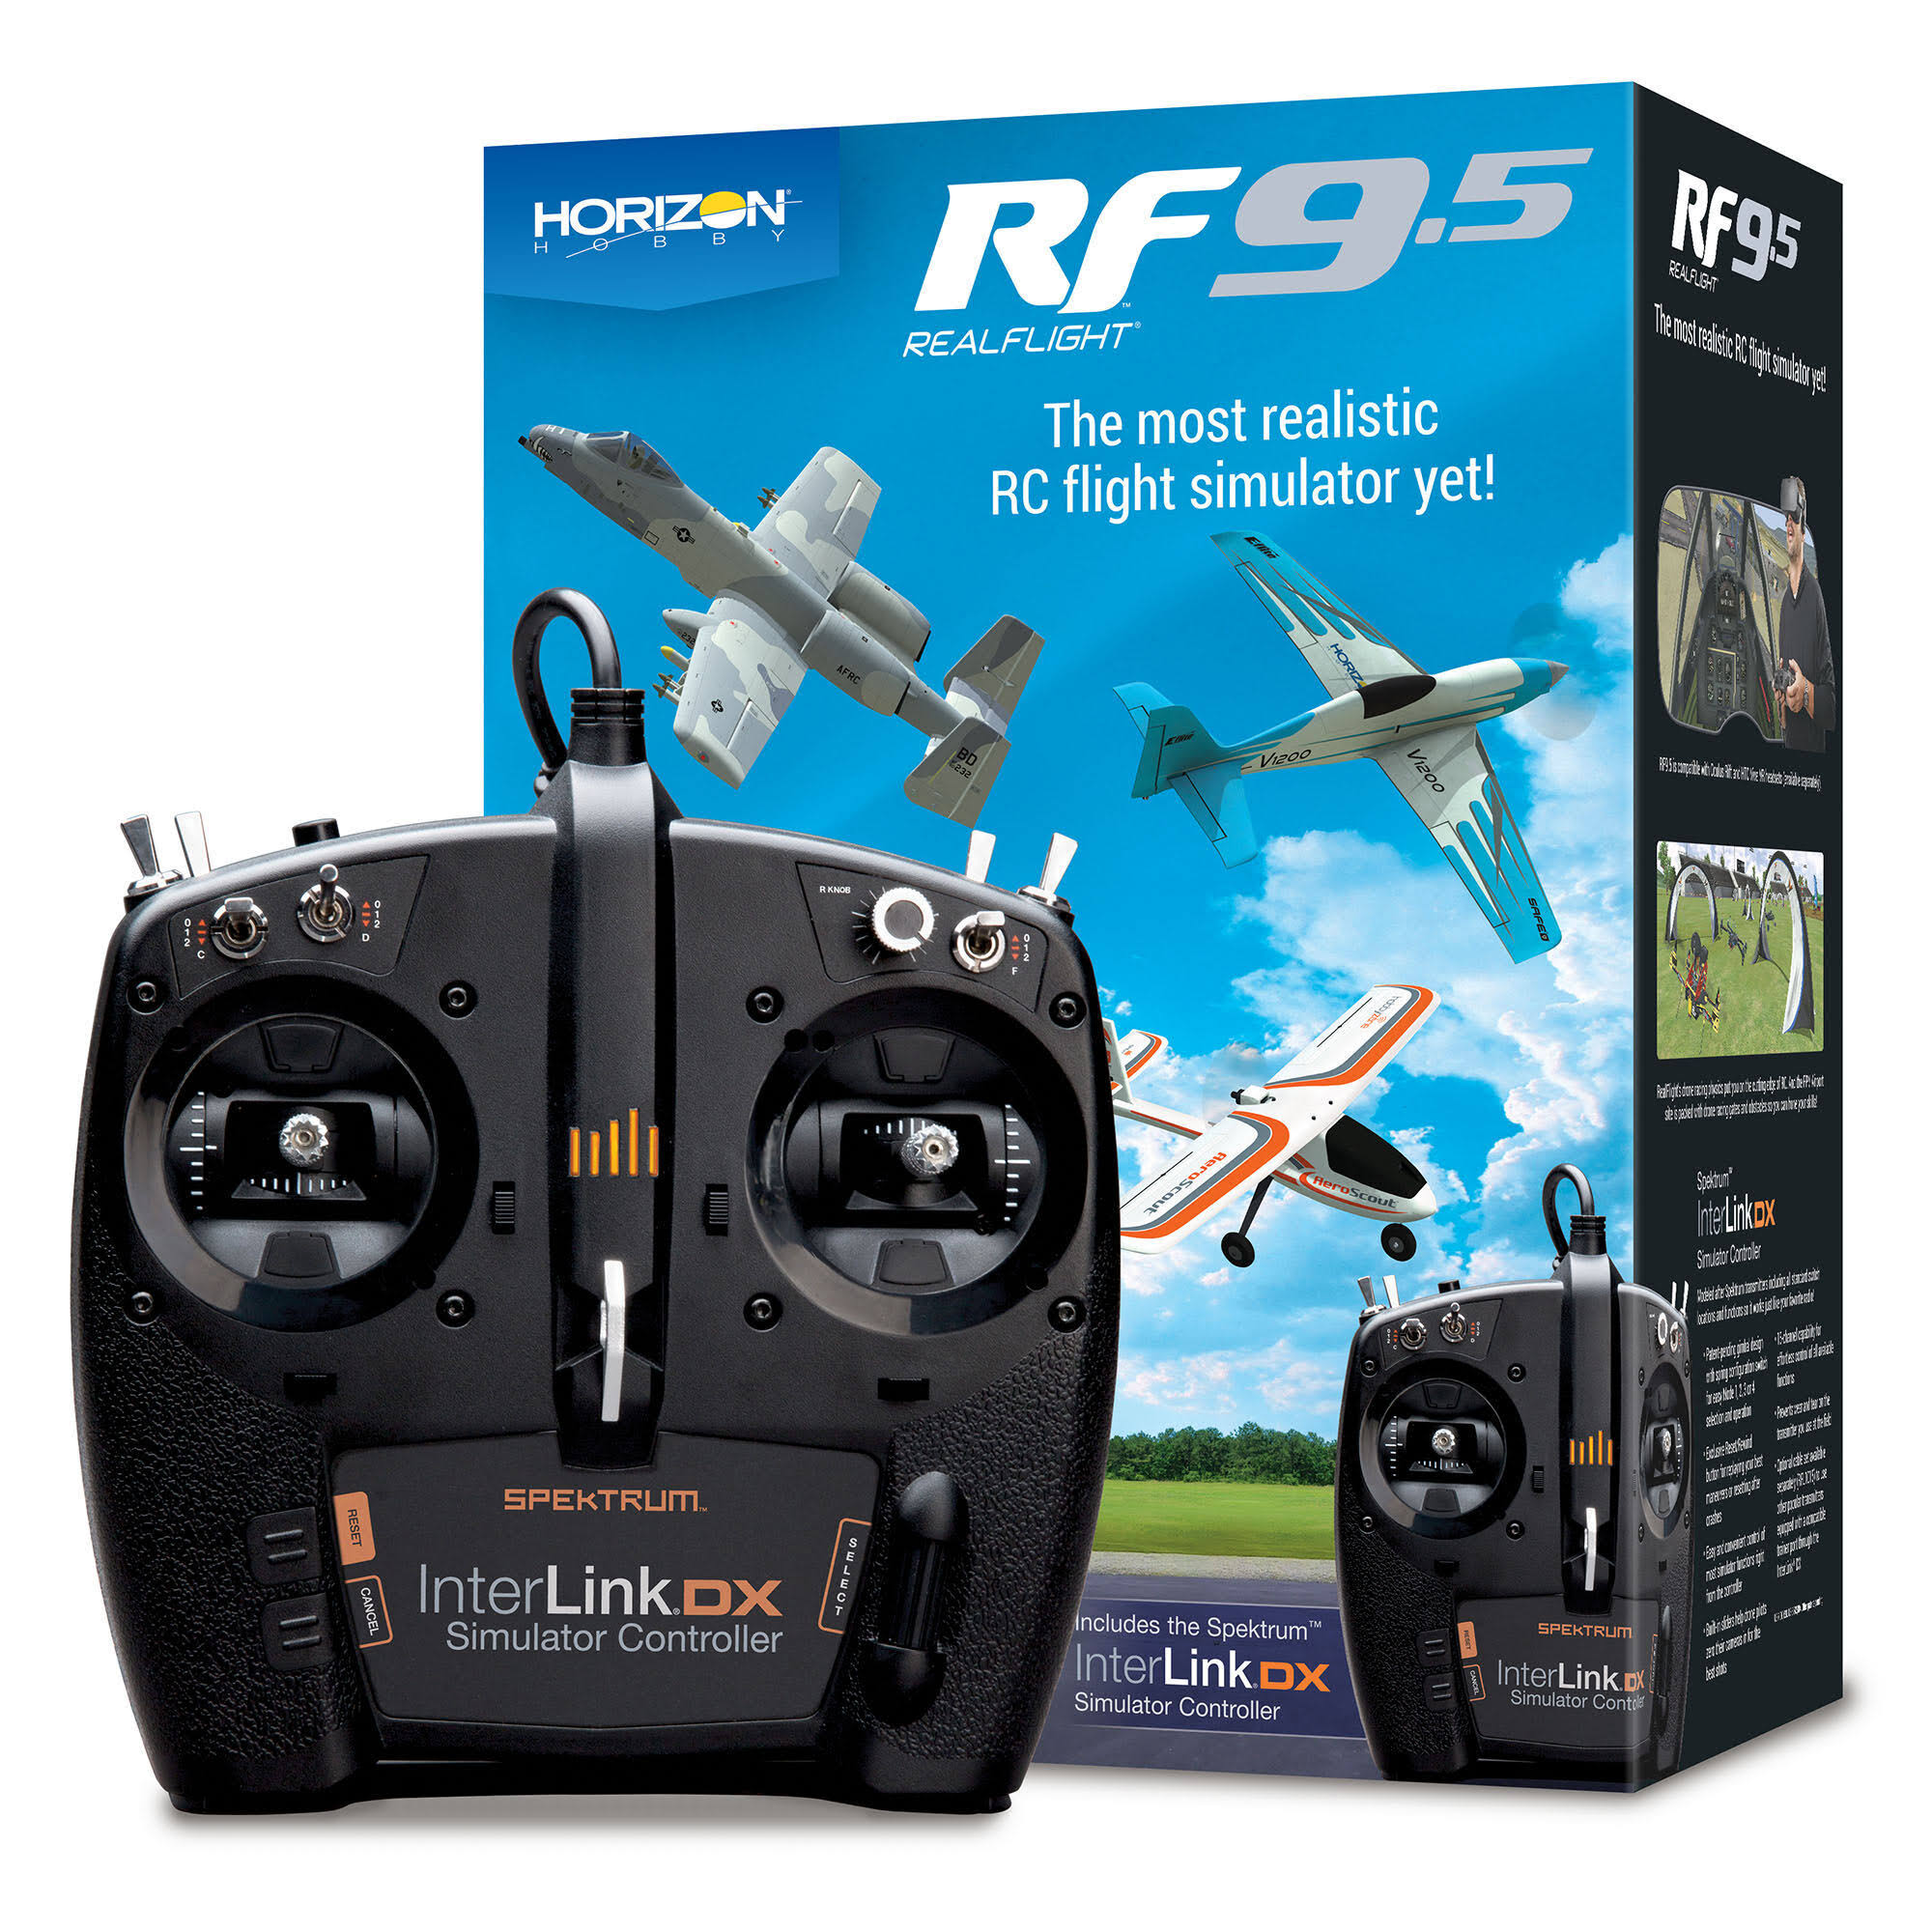 RealFlight 9.5 Flight Simulator w/Spektrum Controller